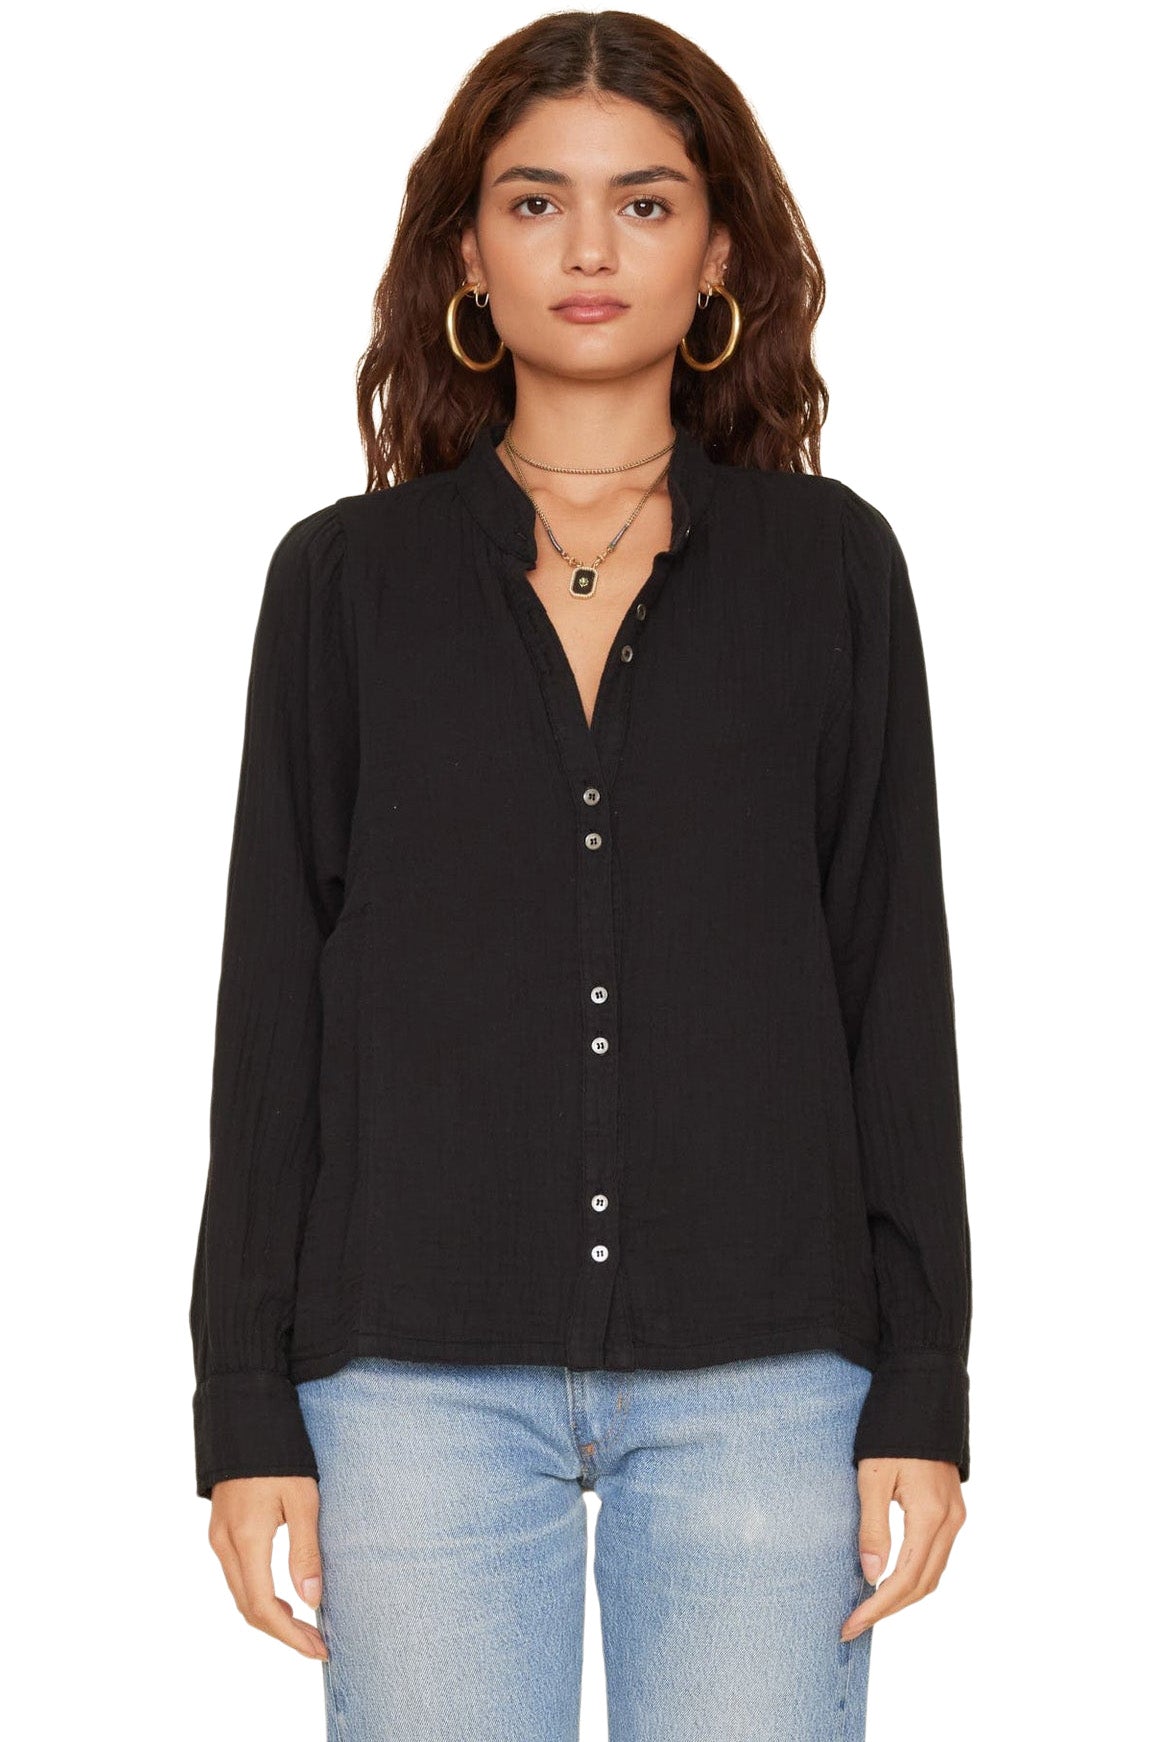 Xirena Gemma Shirt in Black